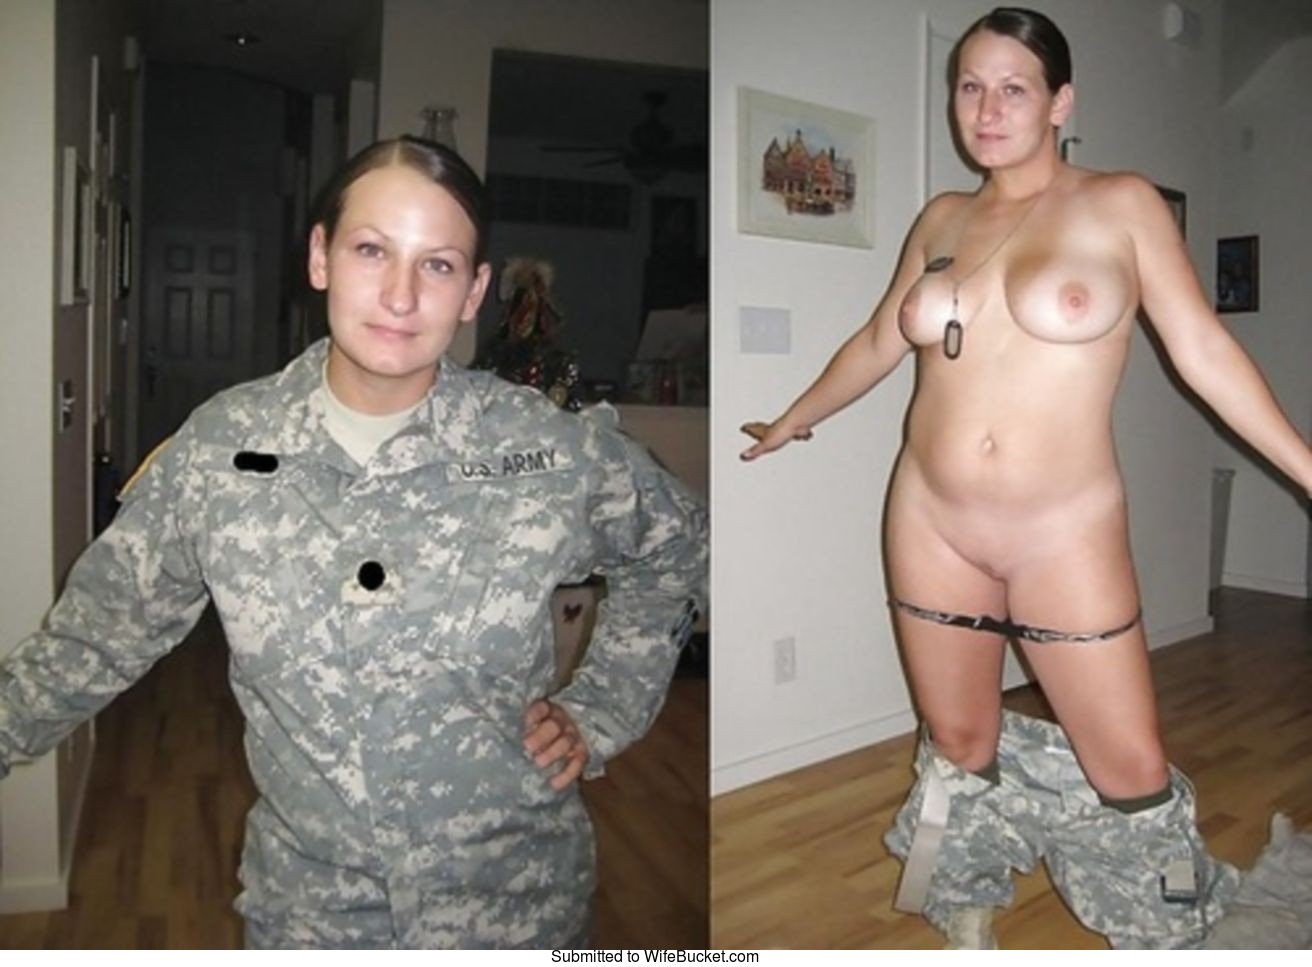 WifeBucket | Naked army women - dangerous but very hot!